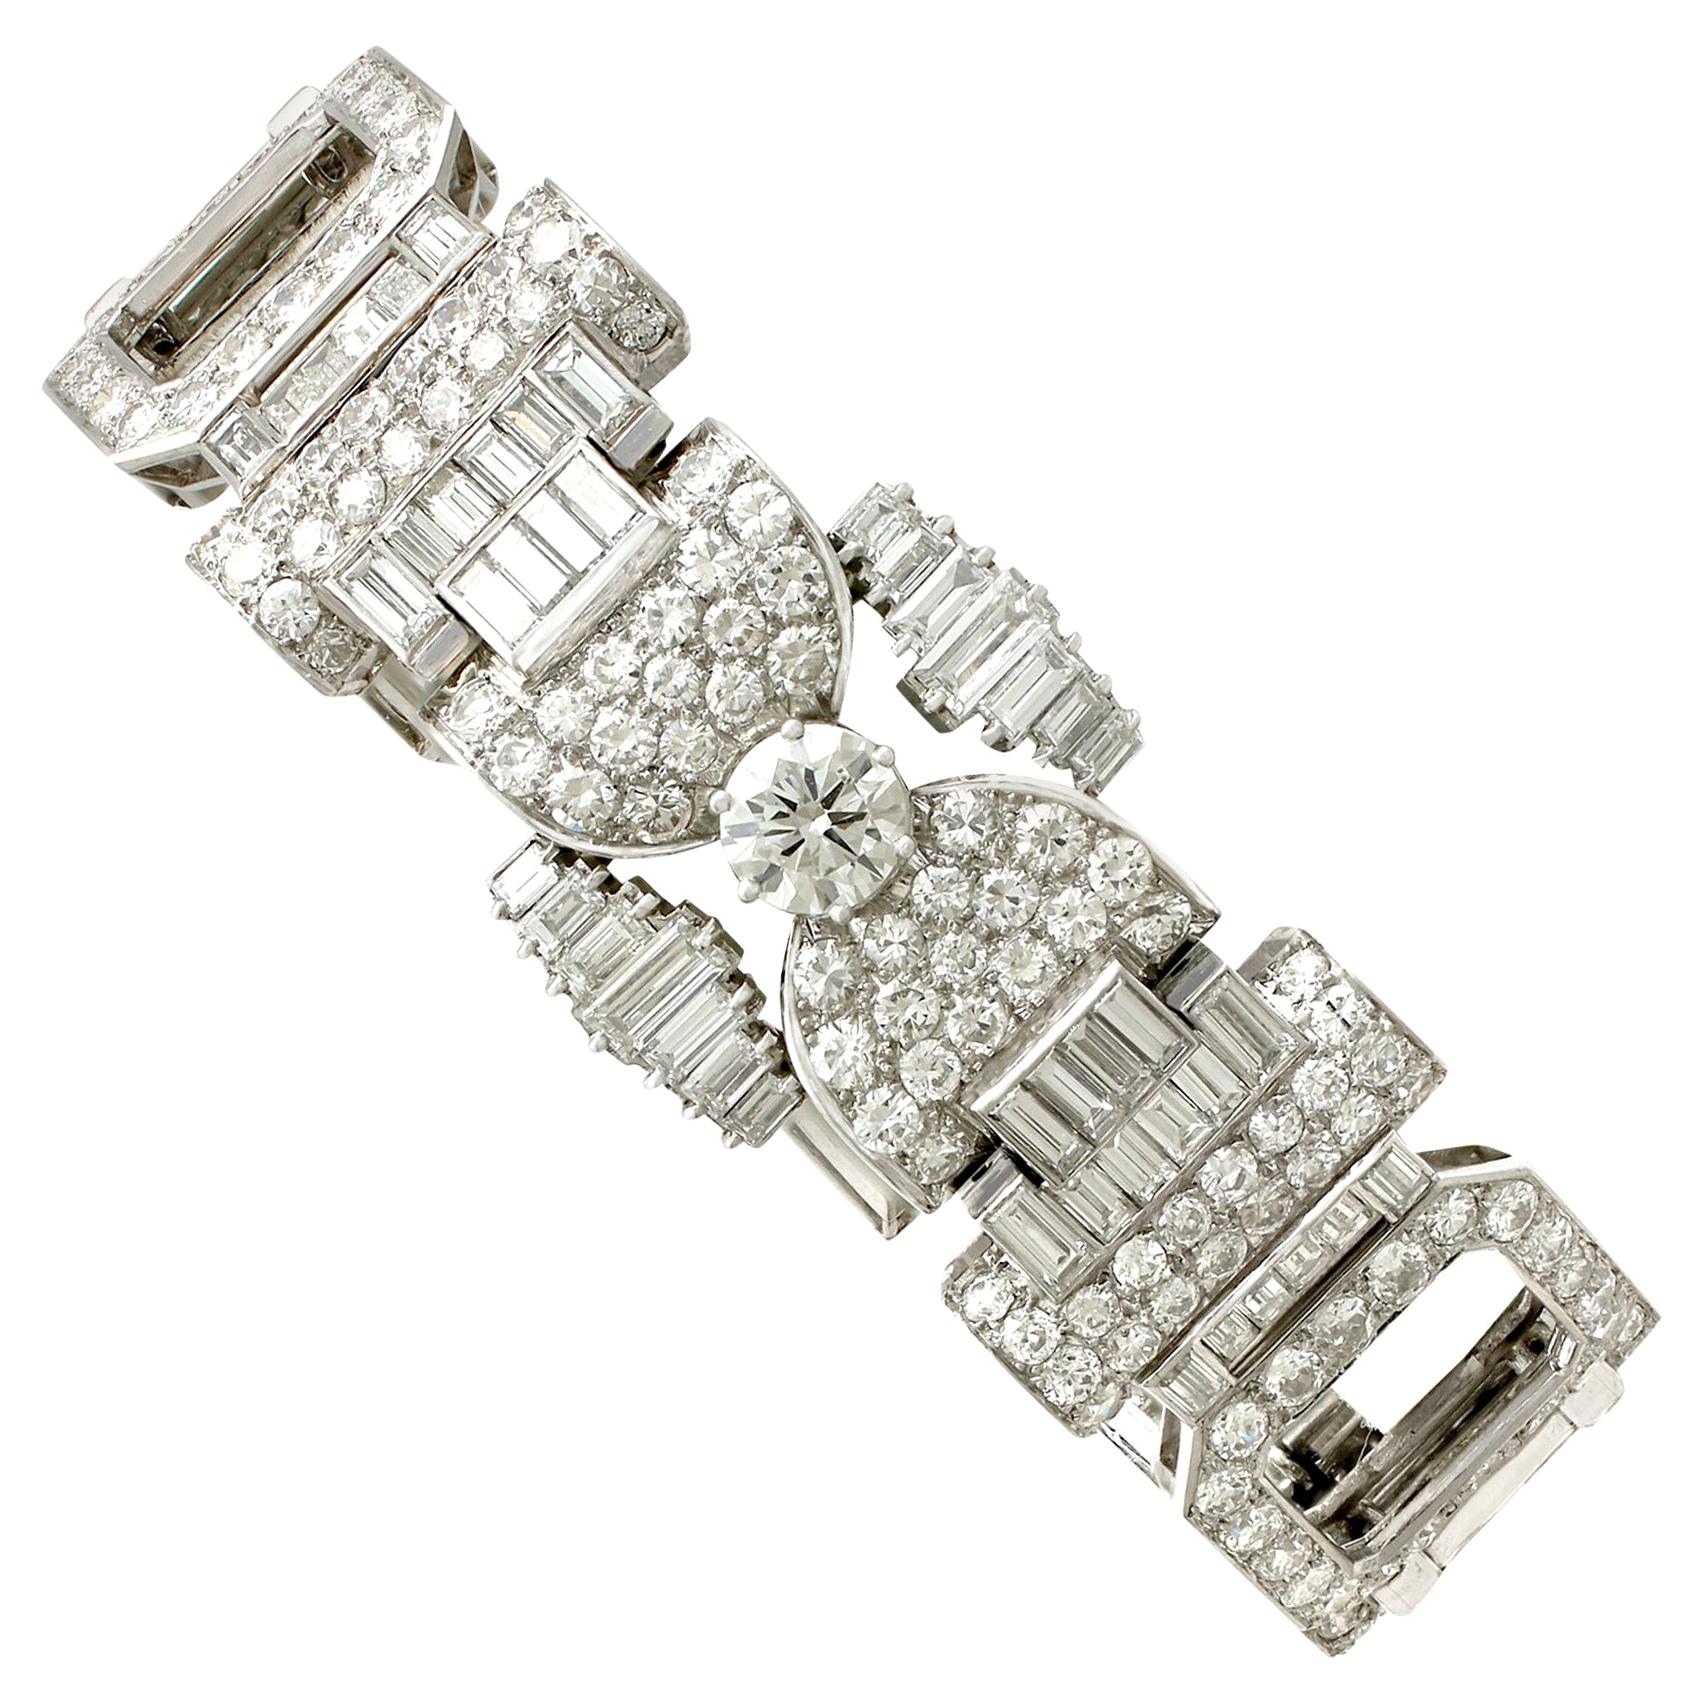 1950s Vintage French 21.38 Carat Diamond and Platinum Bracelet